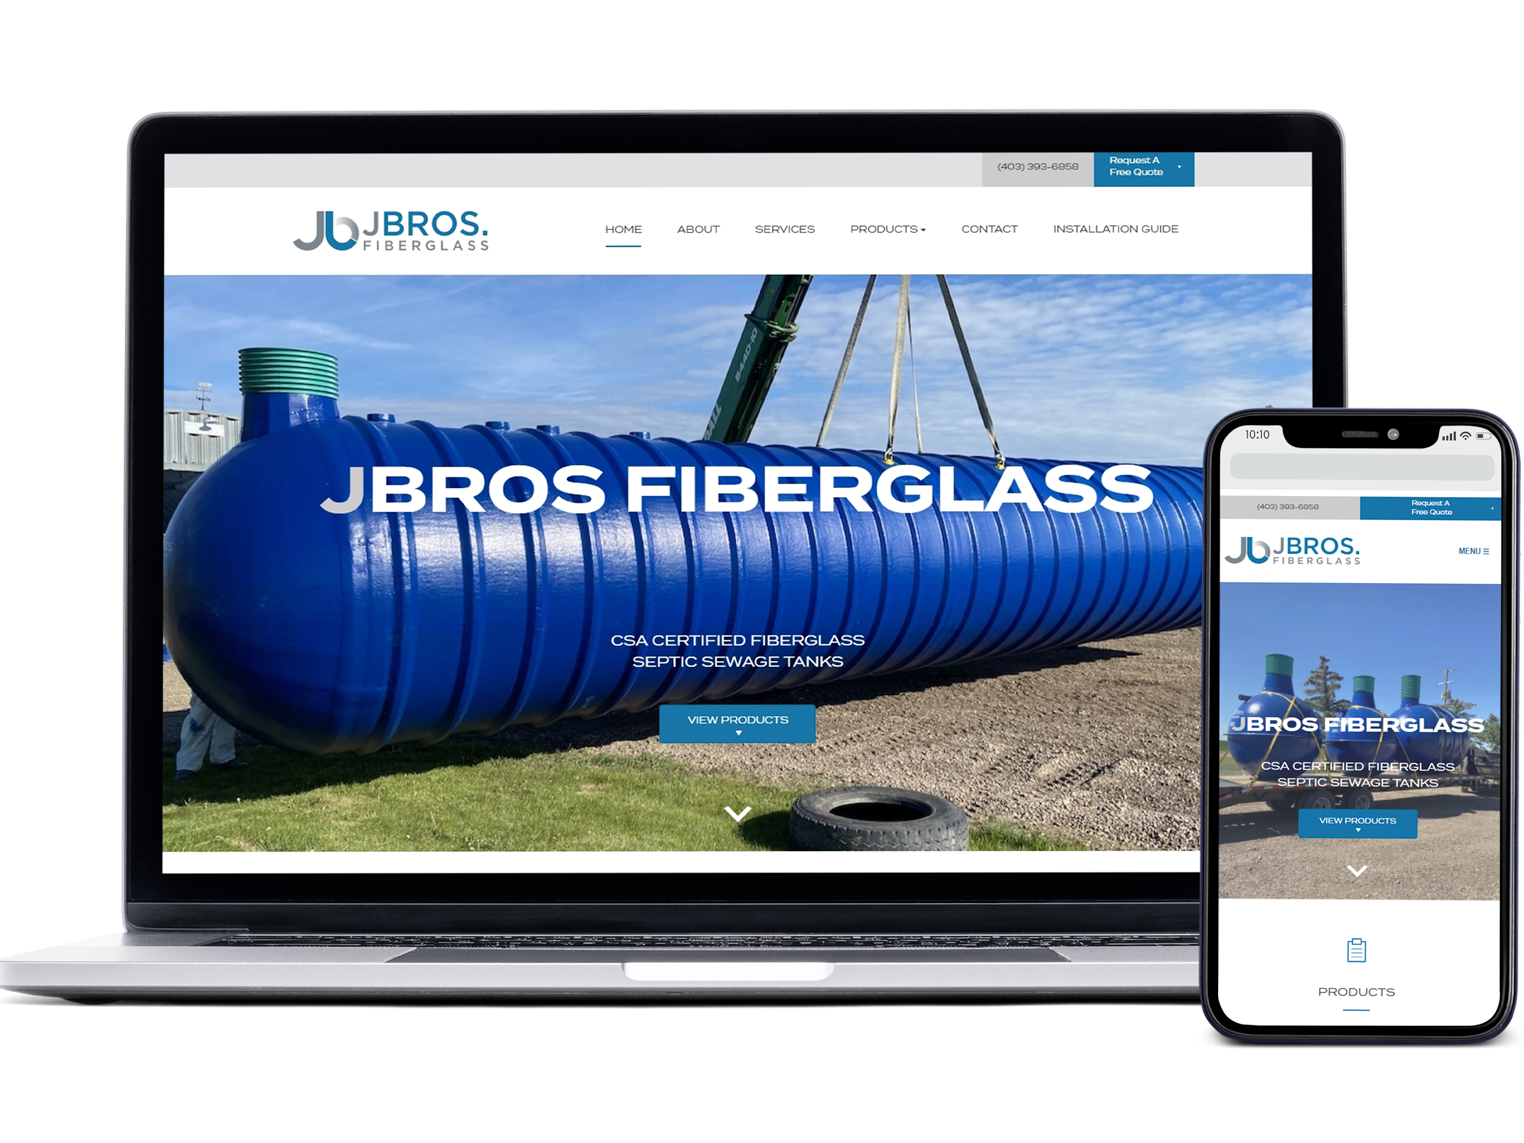 JBROS Fiberglass website mockup on mobile and laptop